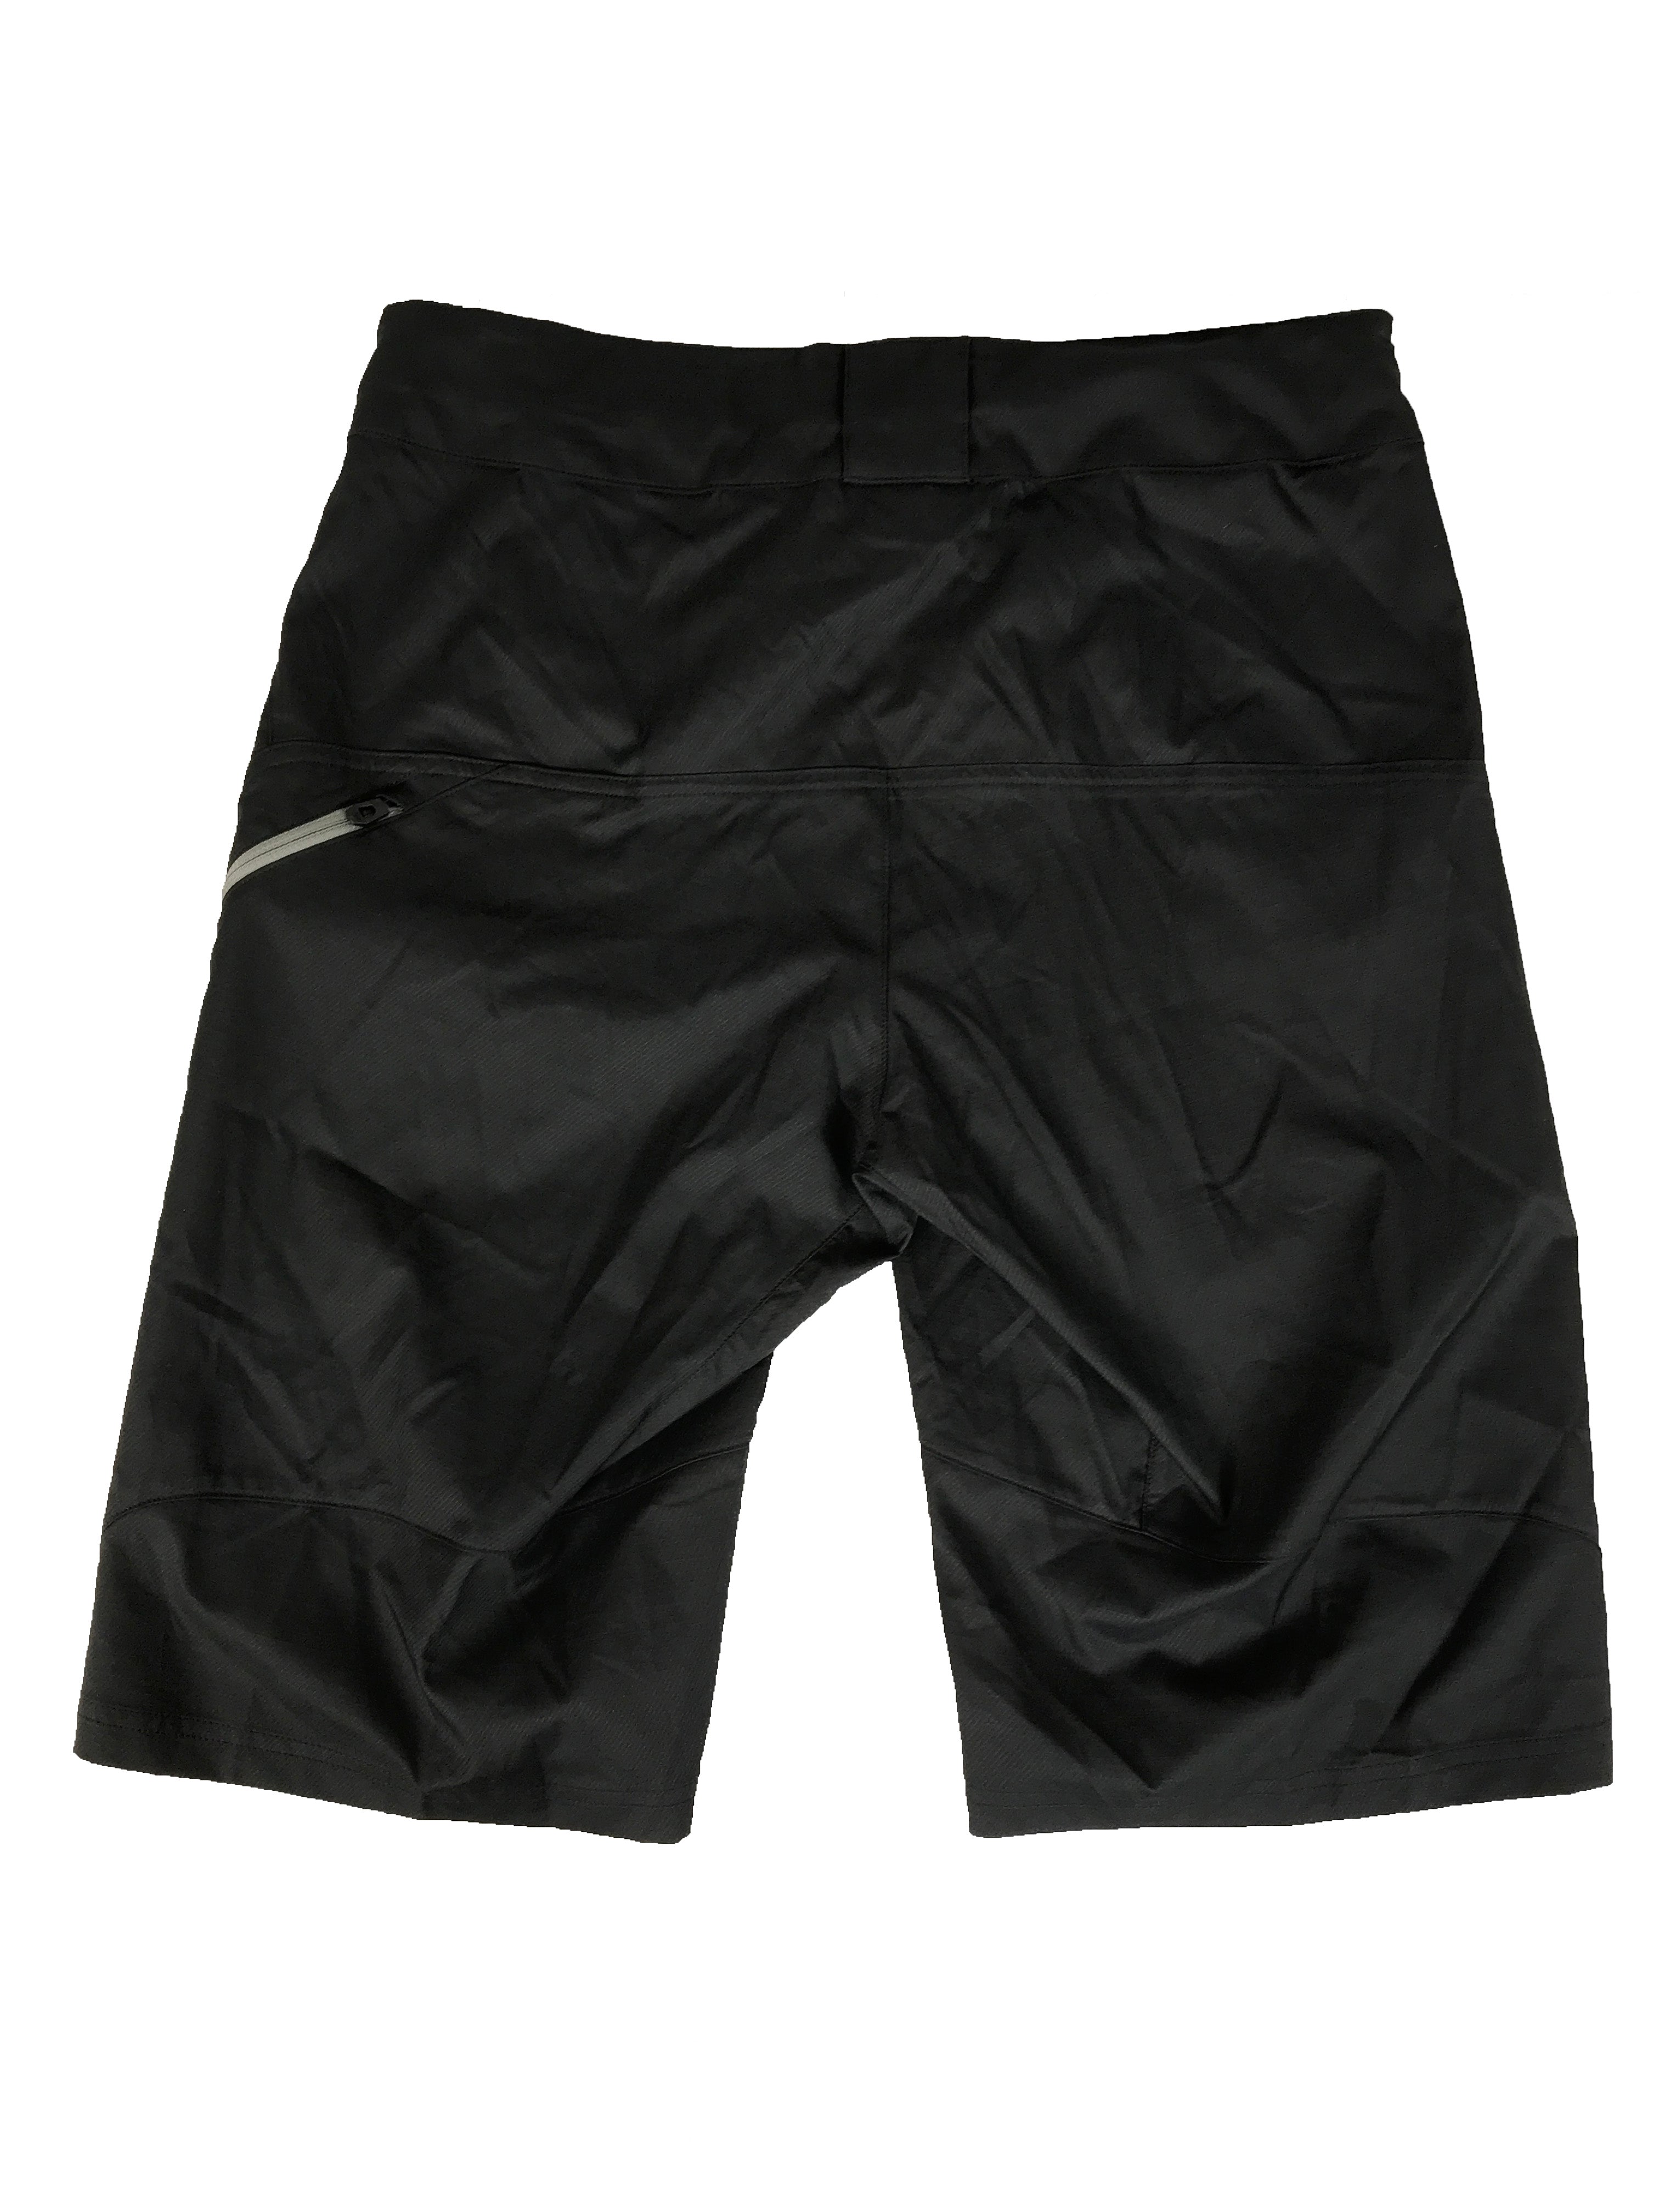 Bontrager Rhythm Black Shorts Men's Size 32 NWT